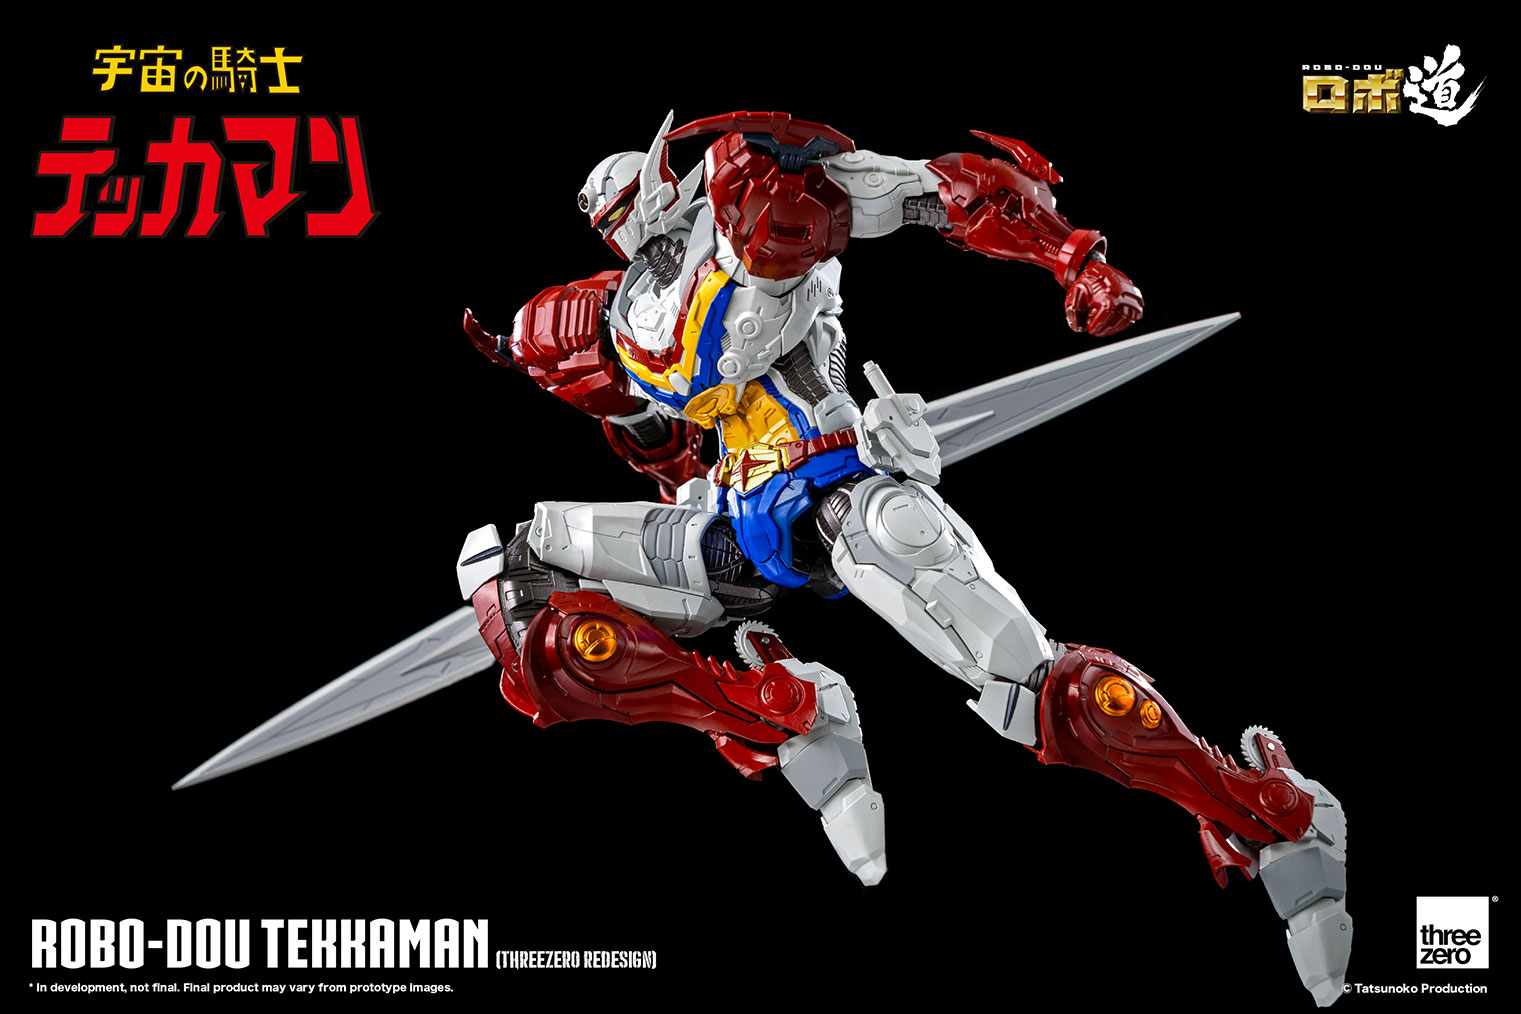 threezero - ROBO-DOU - Tekkaman: The Space Knight - Tekkaman (threezero Redesign)